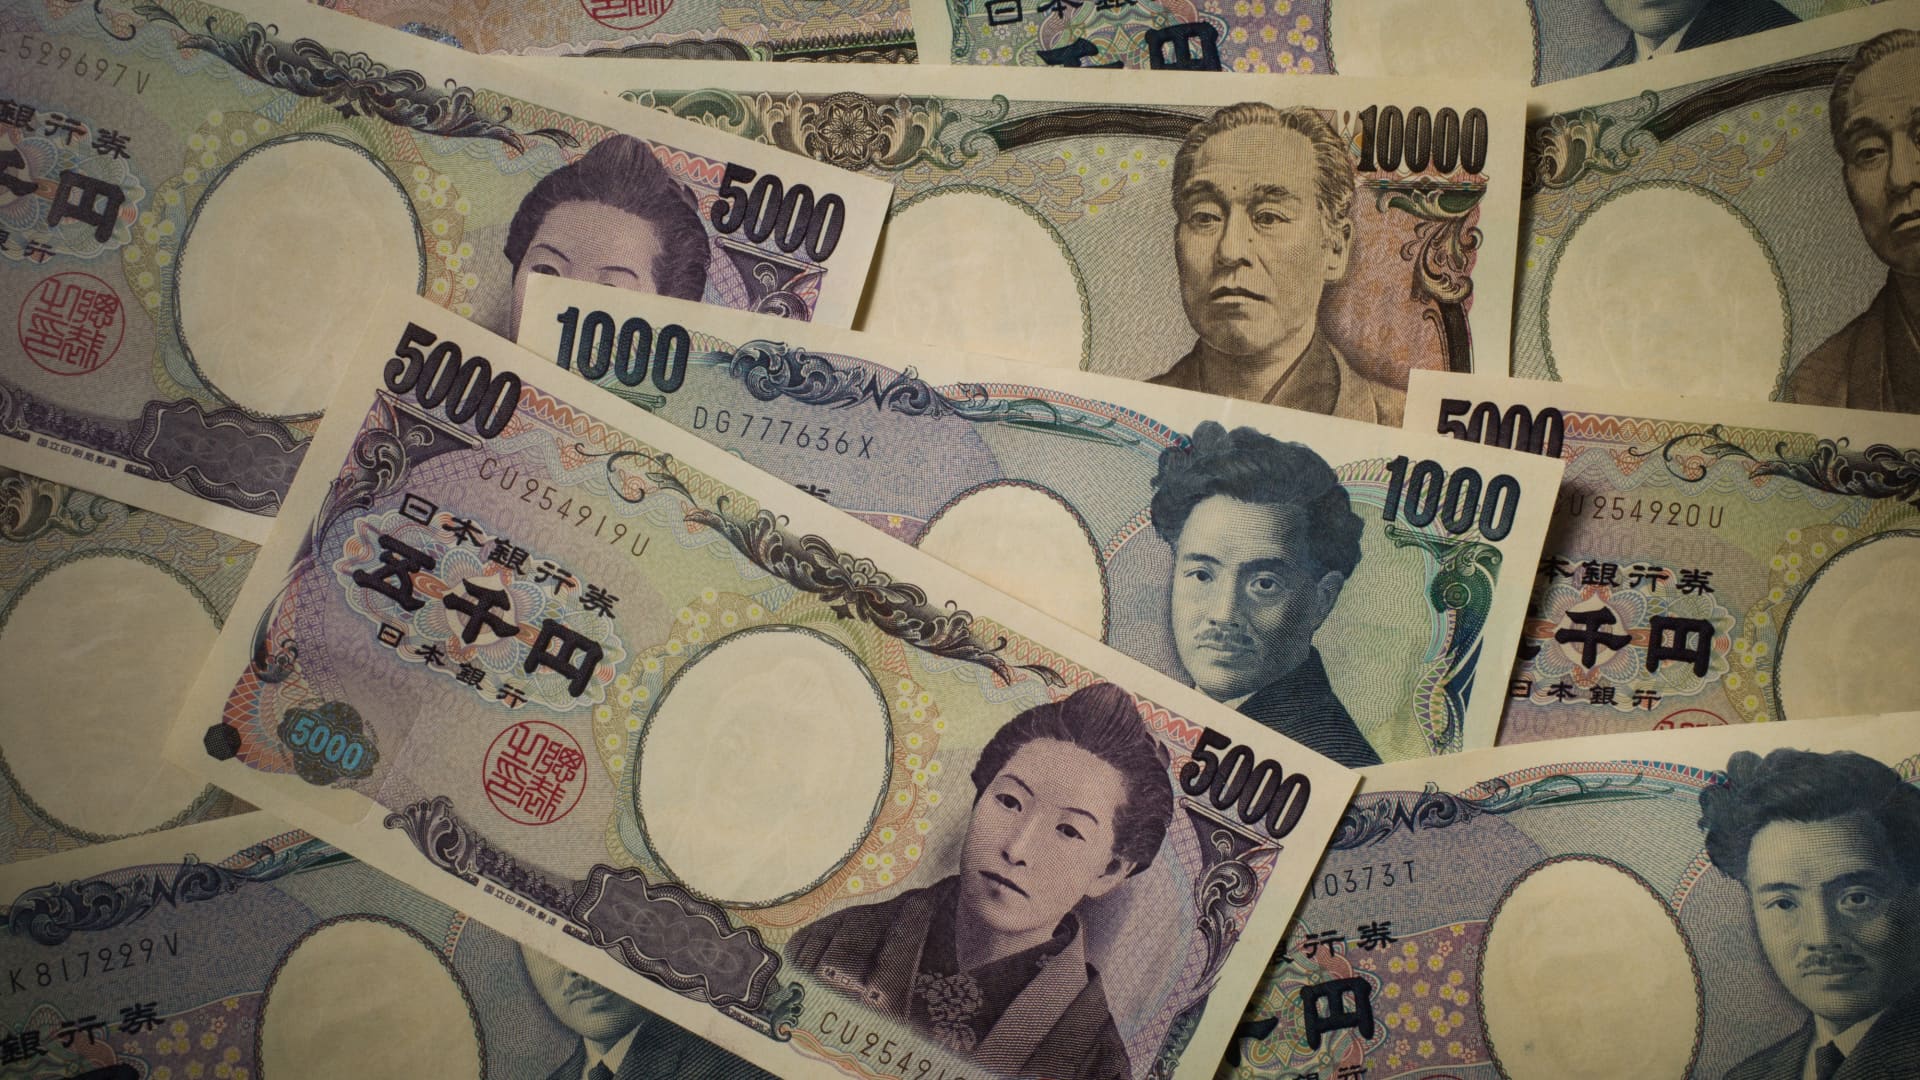 Japanese 1,000 yen, 5,000 yen and 10,000 yen banknotes arranged in Kyoto, Japan.